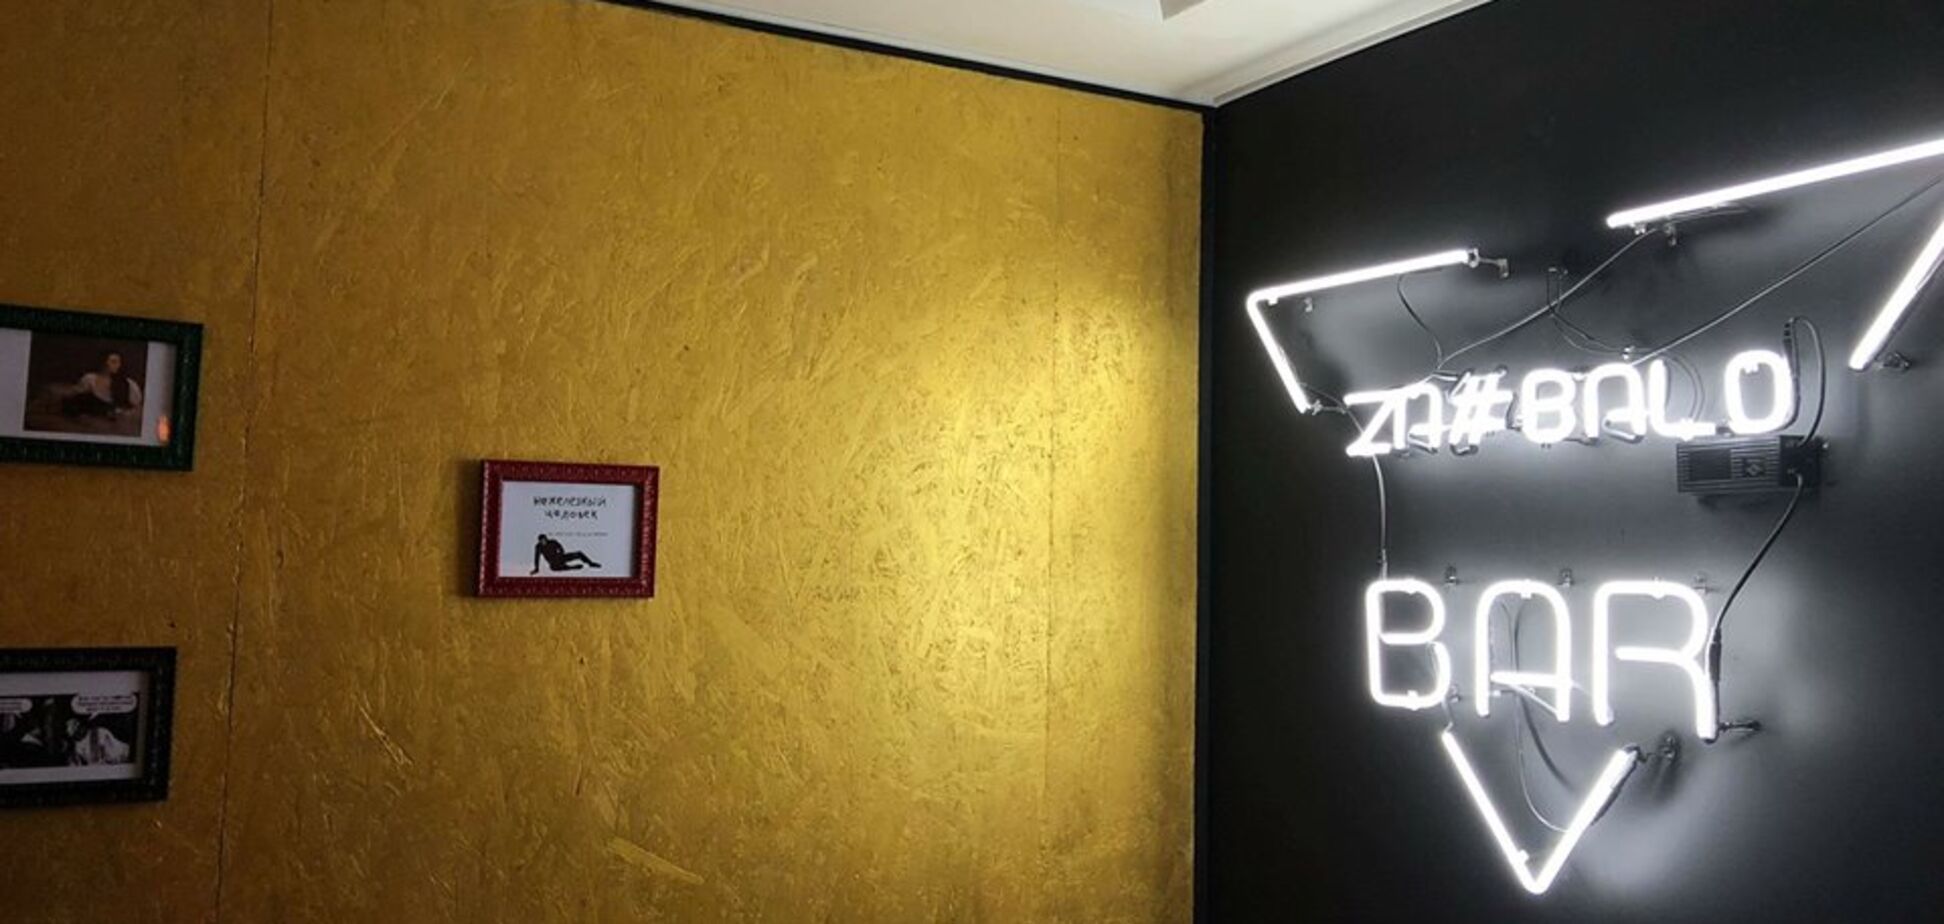 В Киеве открылся бар-психолог Za#balo 